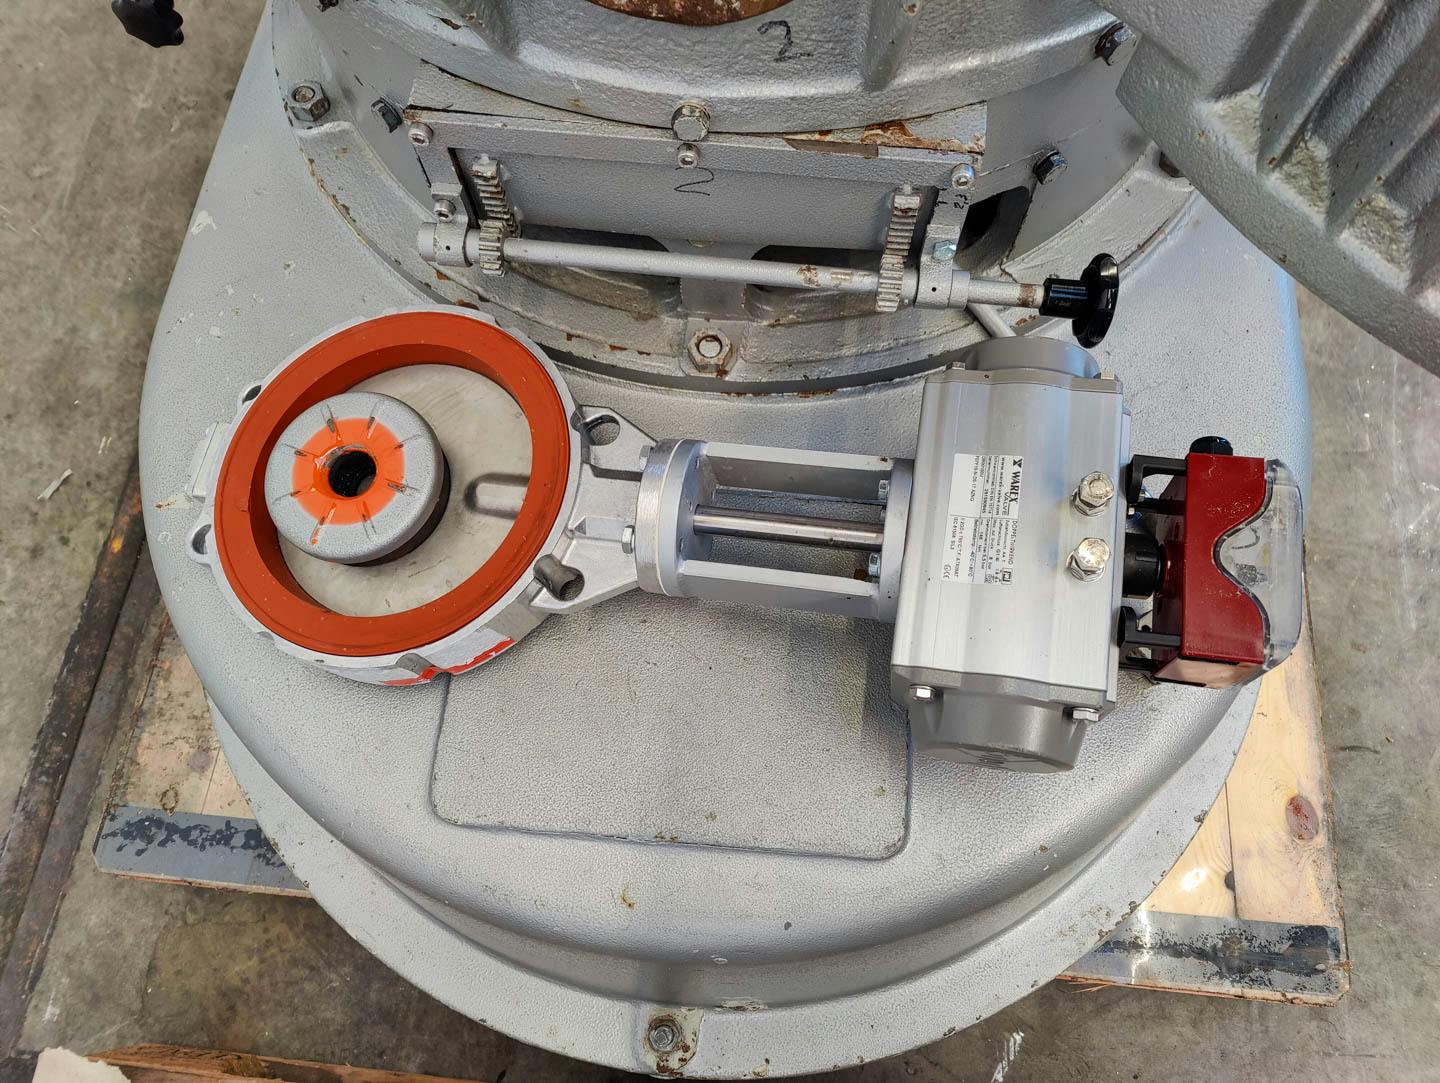 Jackering UR III A/B "Ultra-Rotor" - Mulino a impatto fino - image 10